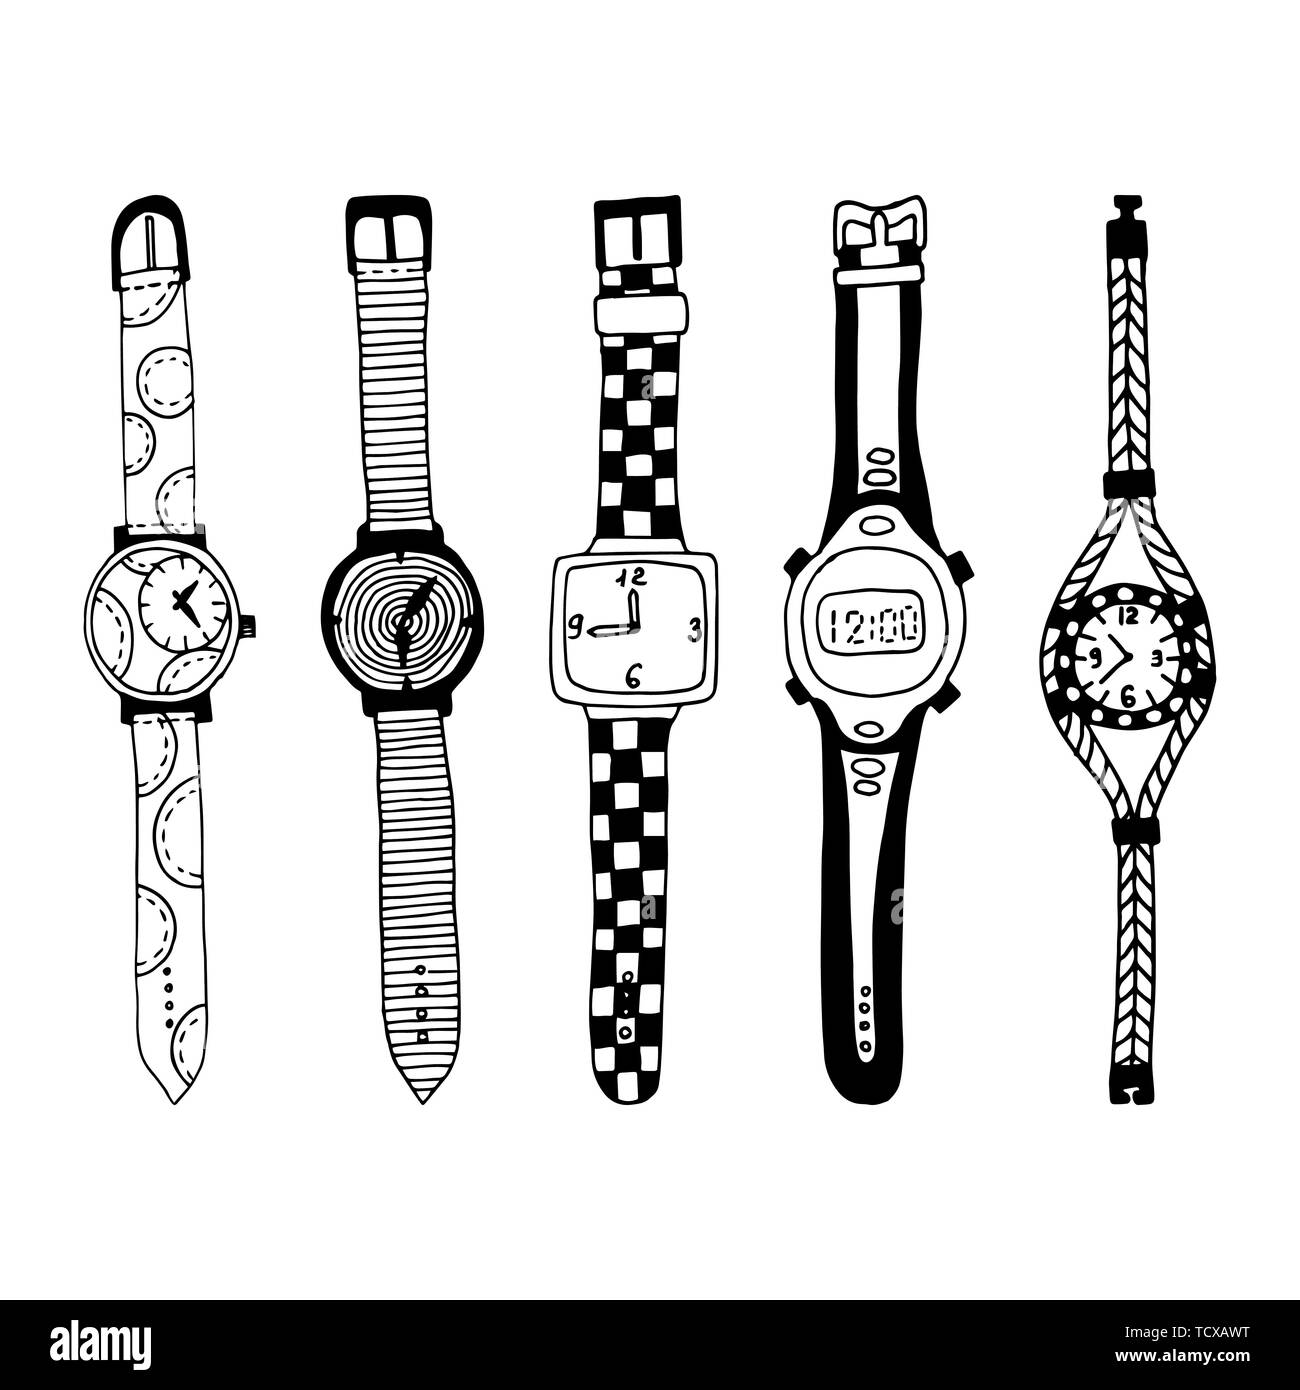 Orologi da polso cartoon. Set di orologi. Illustrazione Vettoriale. Illustrazione Vettoriale